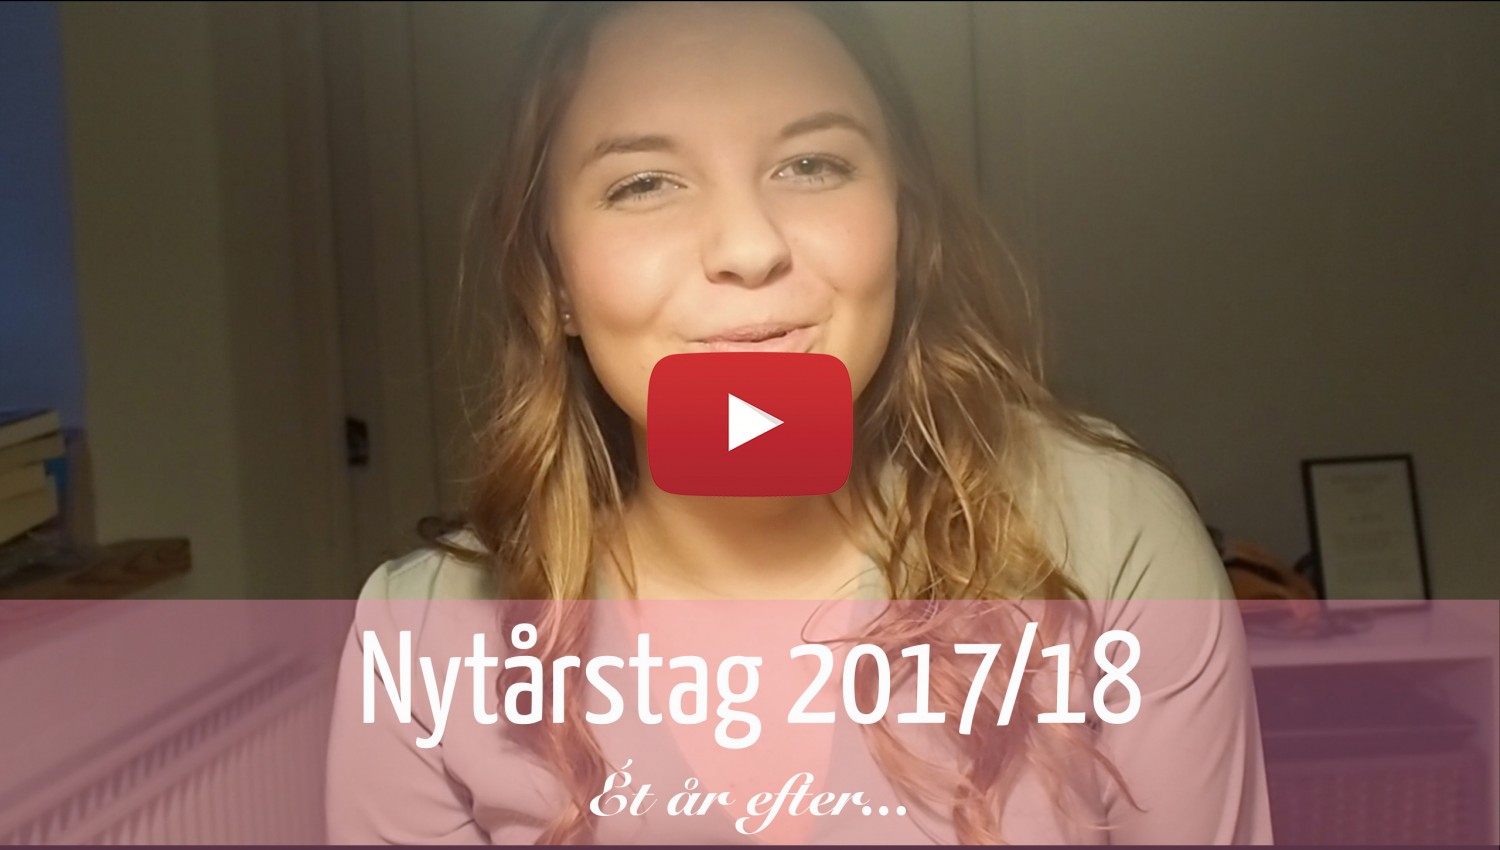 nytårstag-spørgsmål-nytårsvideo-tag-nytår17/18-video-vlog-blogger-